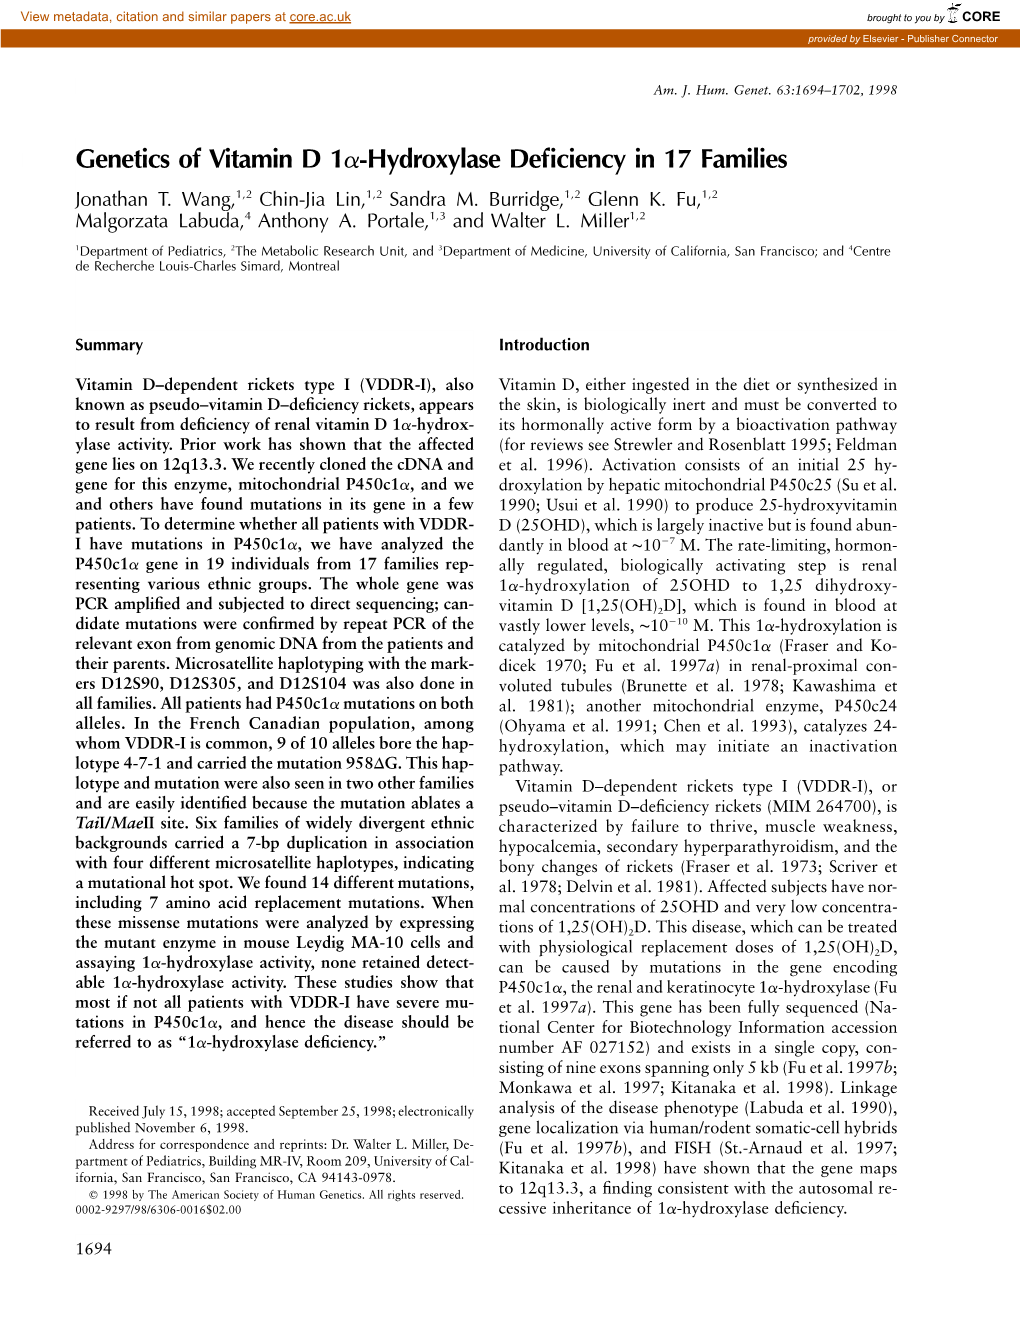 Genetics of Vitamin D 1A-Hydroxylase Deficiency in 17 Families